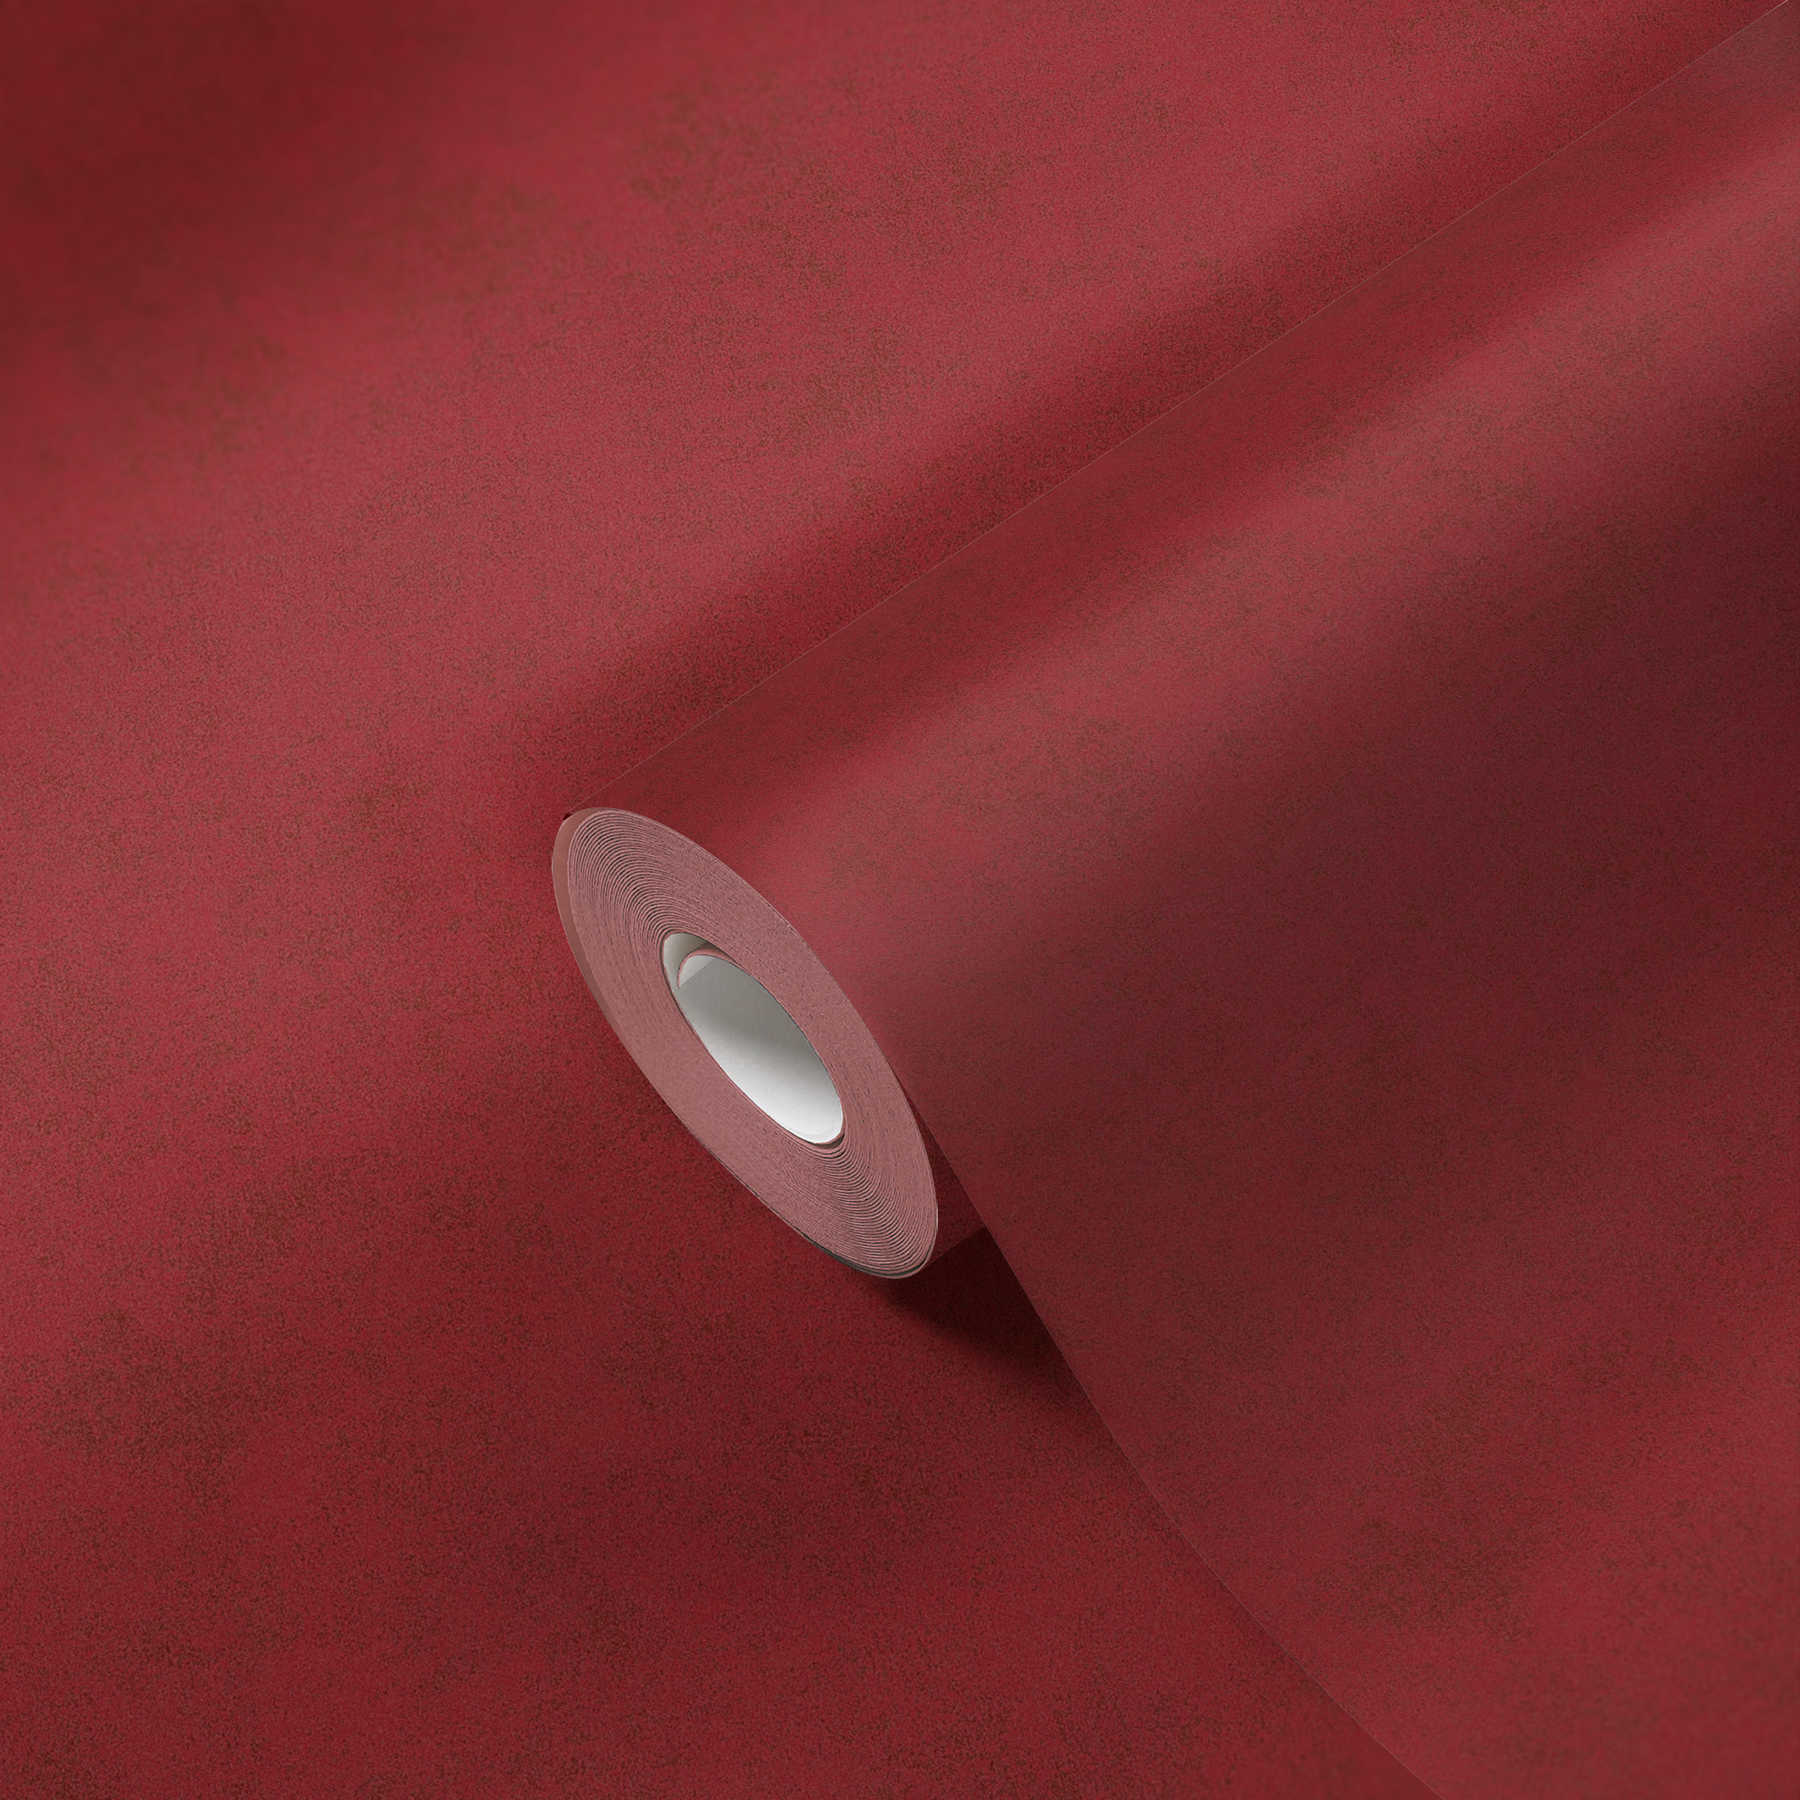             Unifarbene Vliestapete mit melierter Struktur – Rot
        